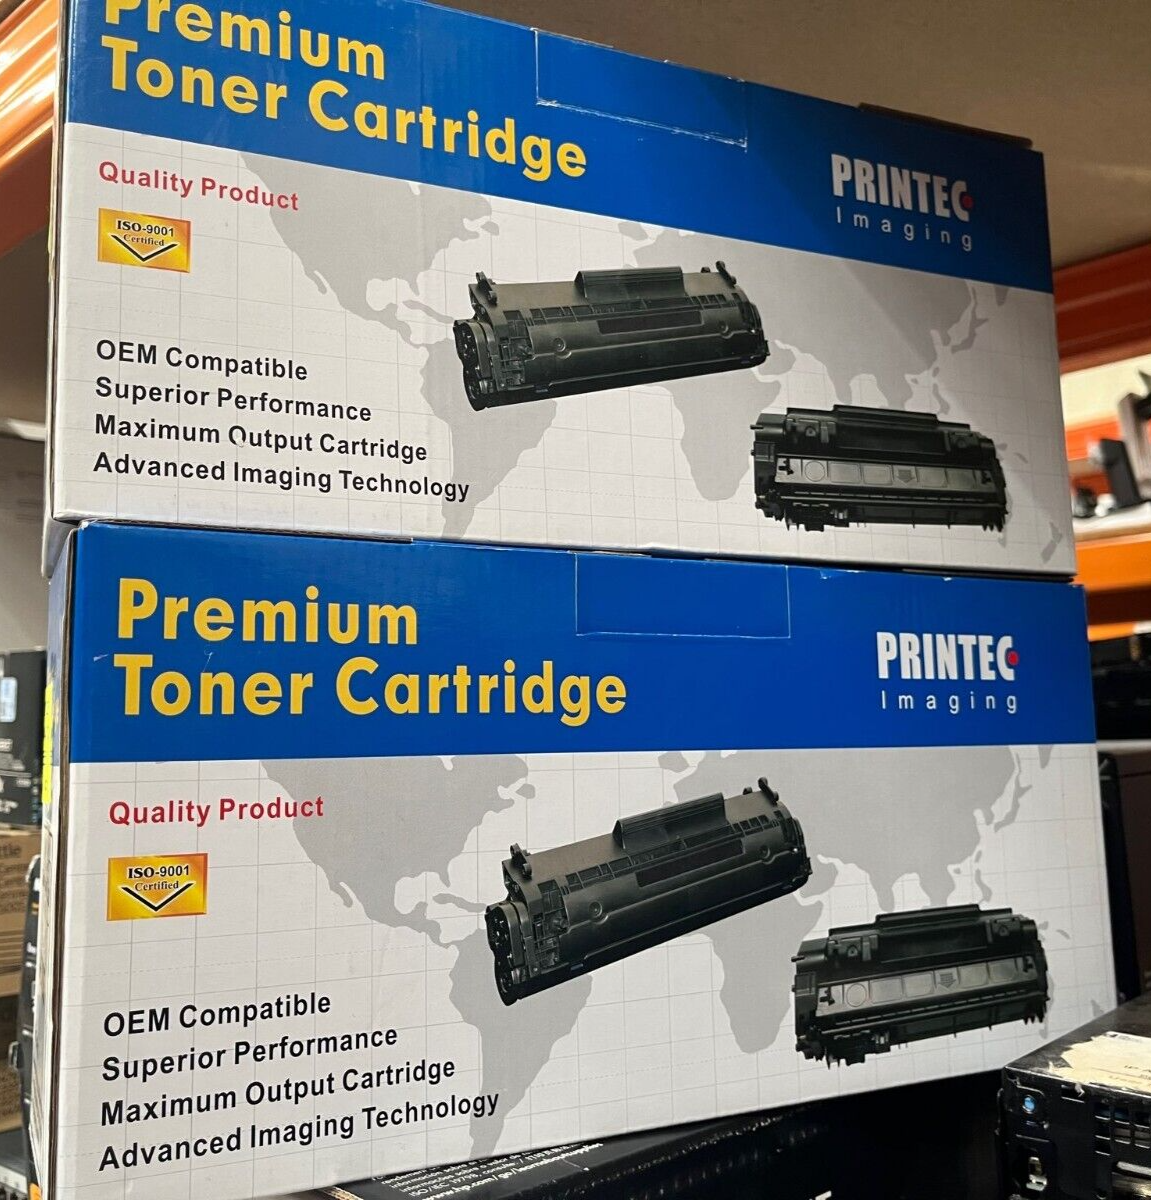 2x Printec Imaging Premium Toner Cartridge Black SA-CLTK407S/SEE Samsung CLP CLX